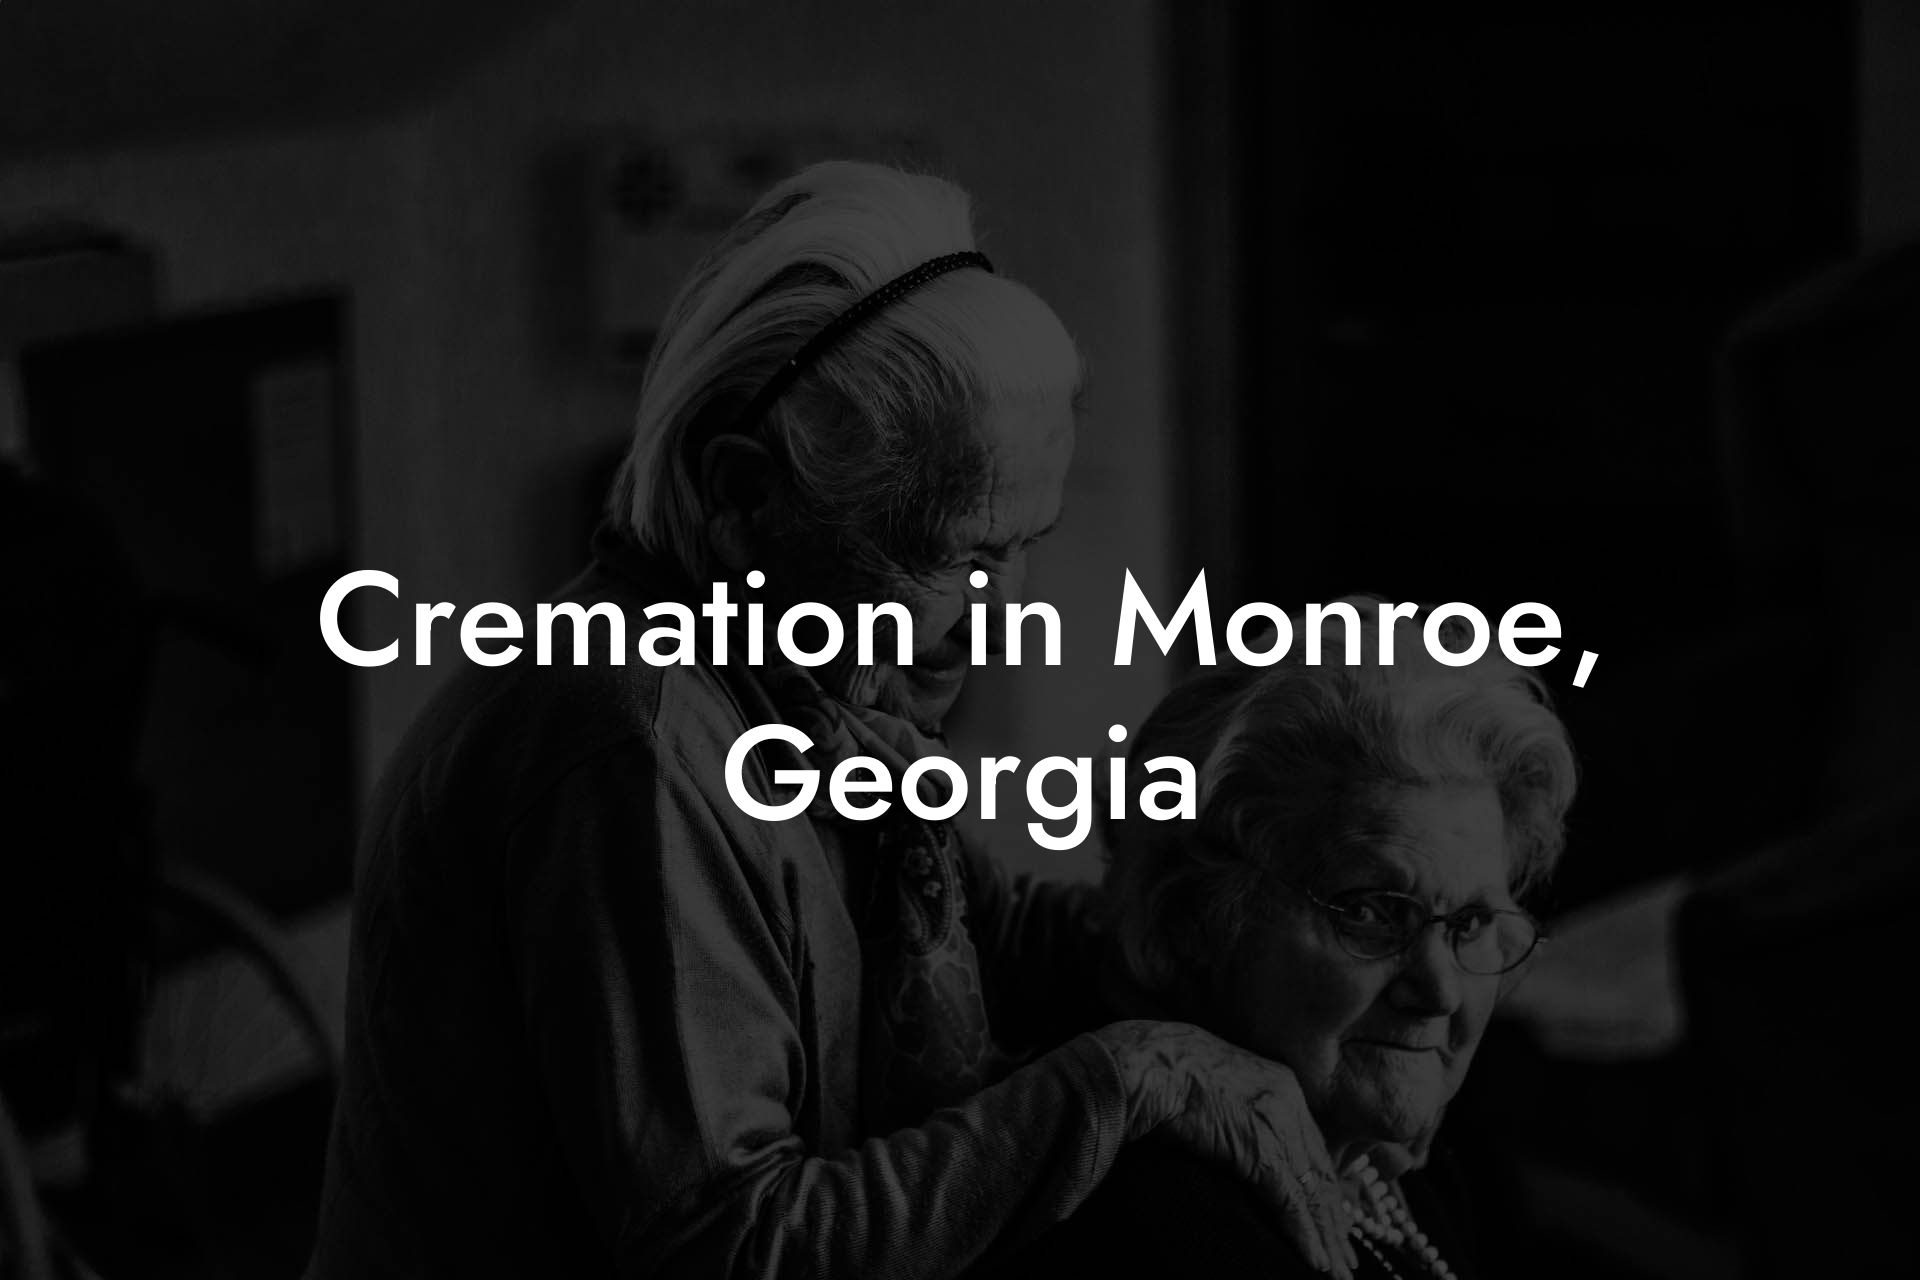 Cremation in Monroe, Georgia